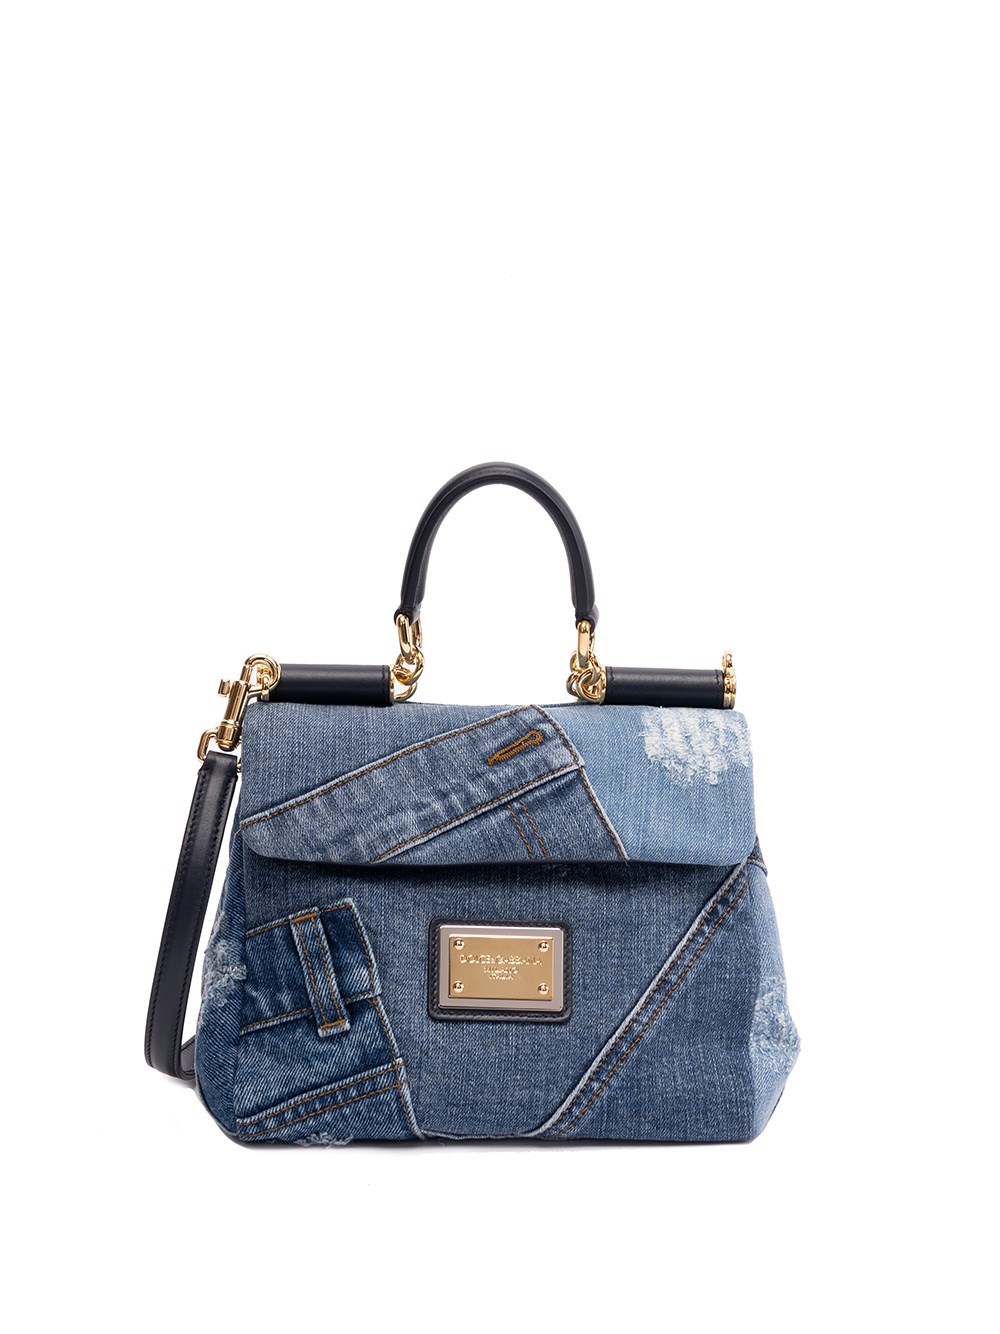 Dolce & Gabbana Denim Handbag In Blu | ModeSens